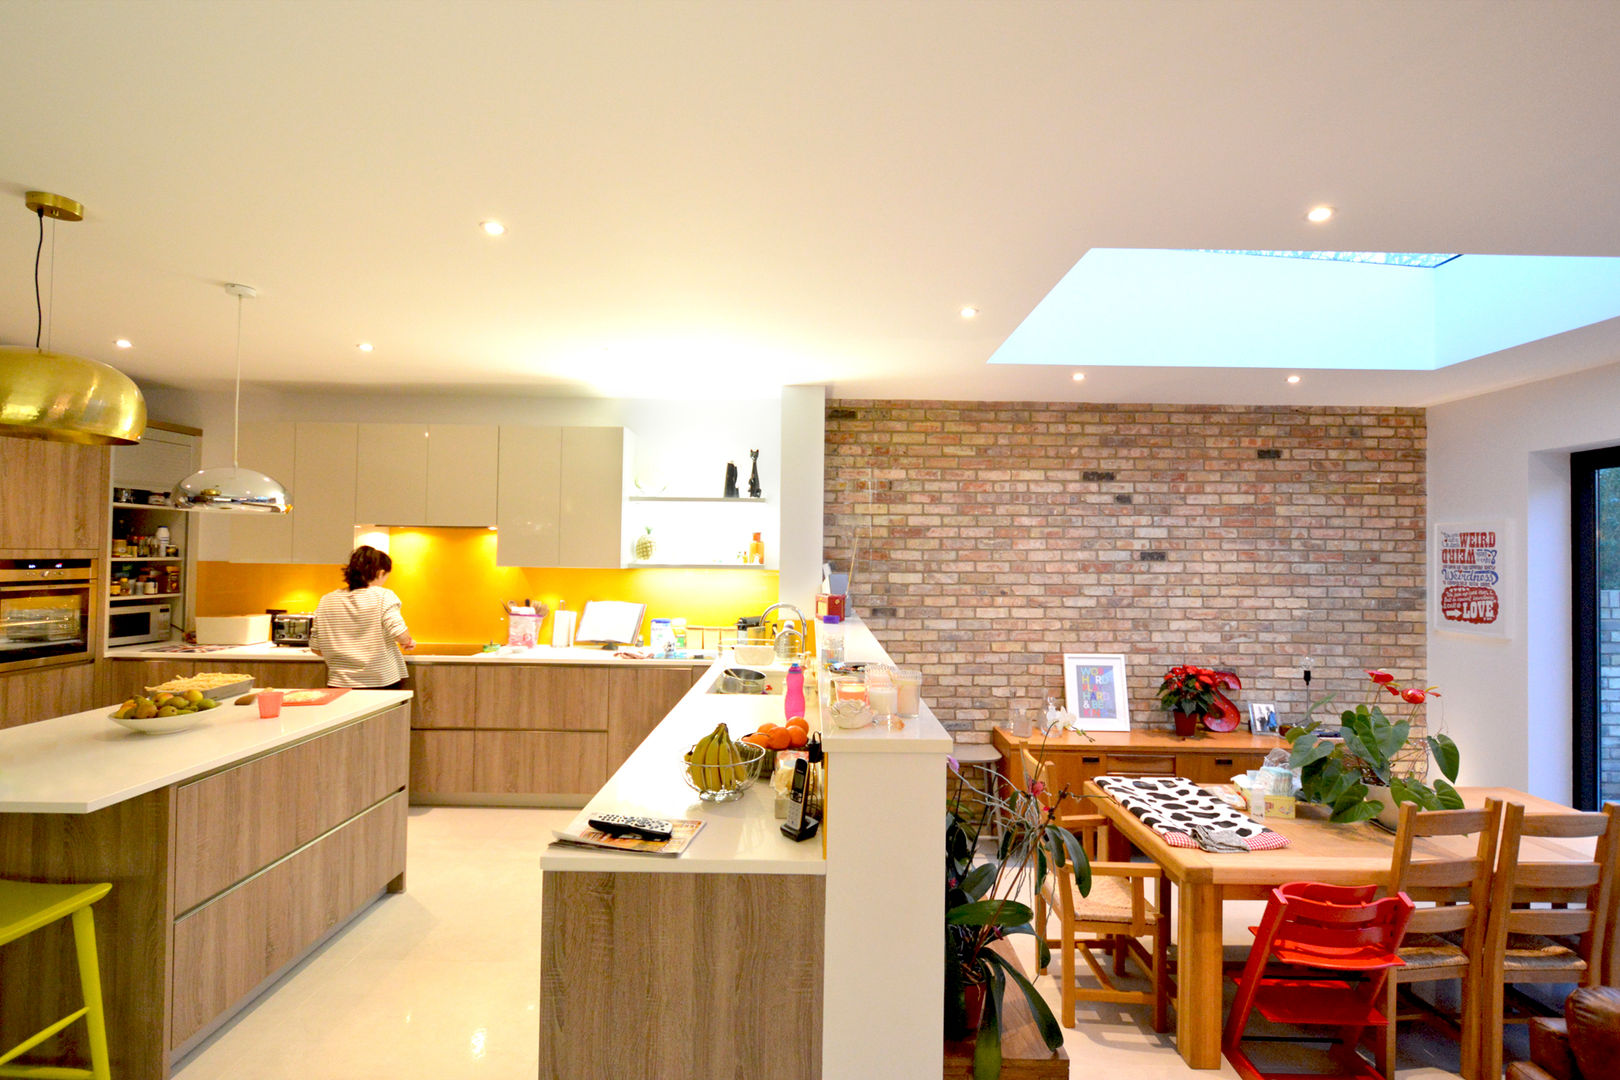 Grange Park, Enfield N21 | House extension GOAStudio London residential architecture limited Cocinas modernas